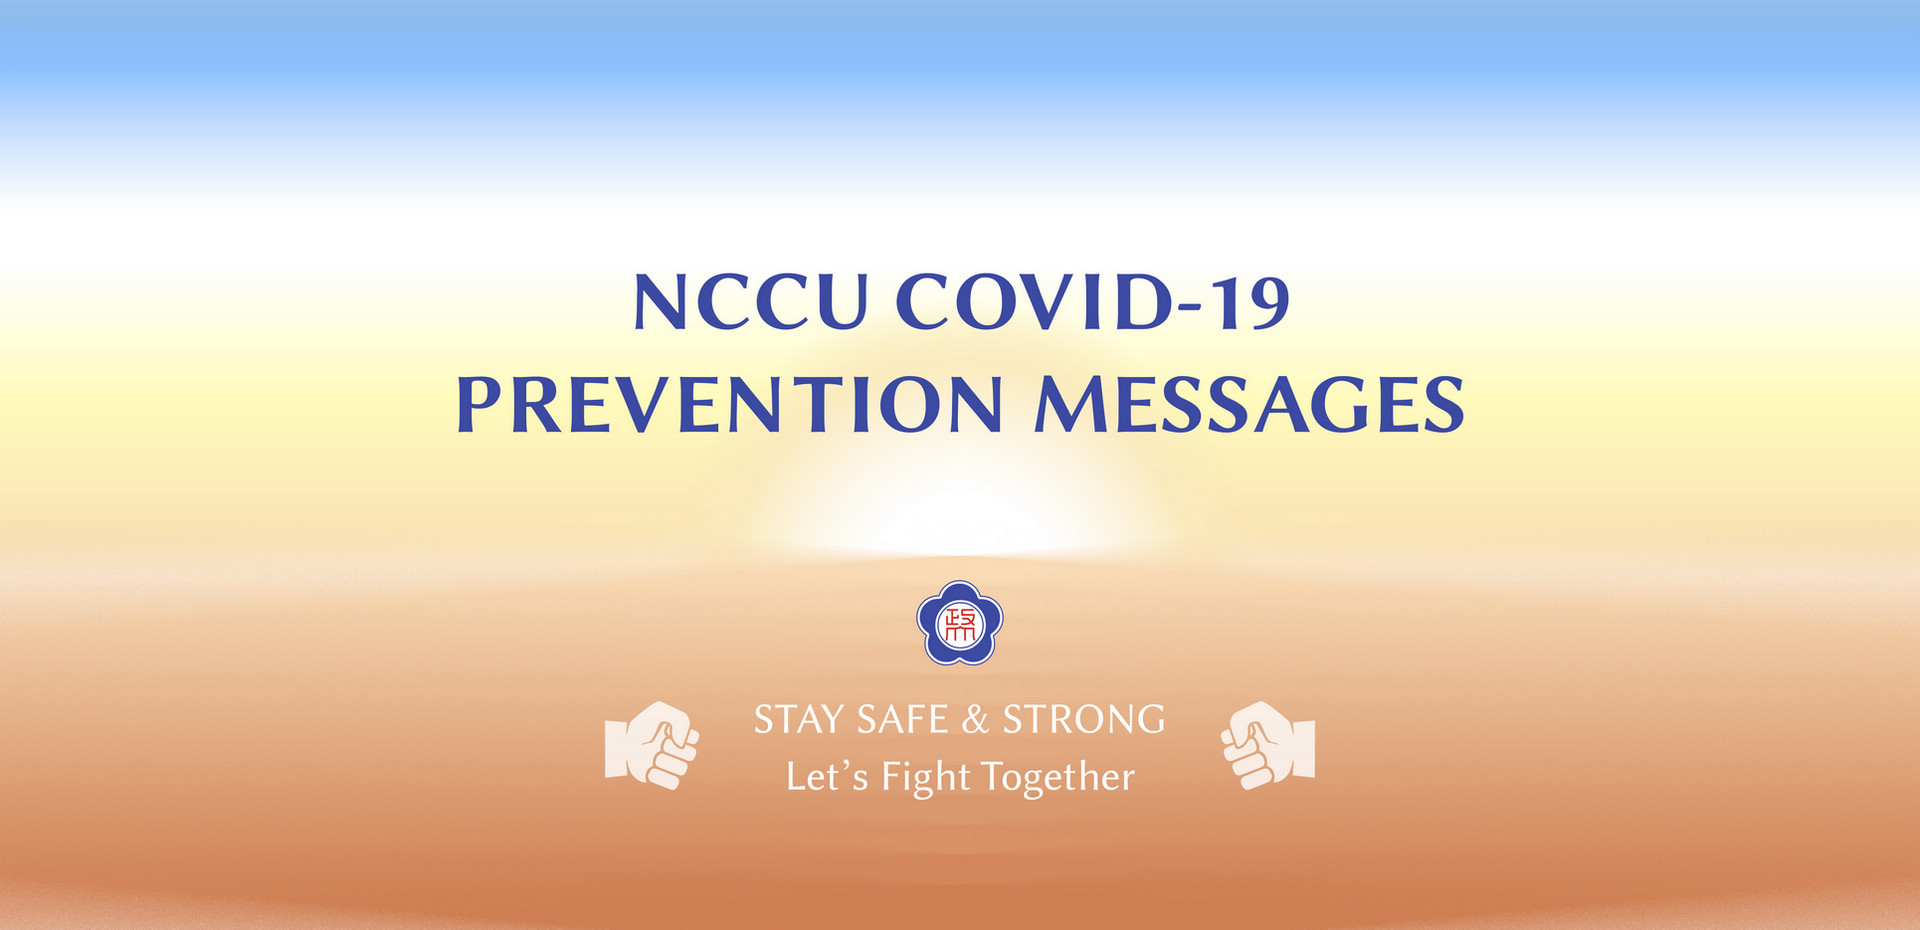 NCCU COVID-19 PREVENTION MESSAGES